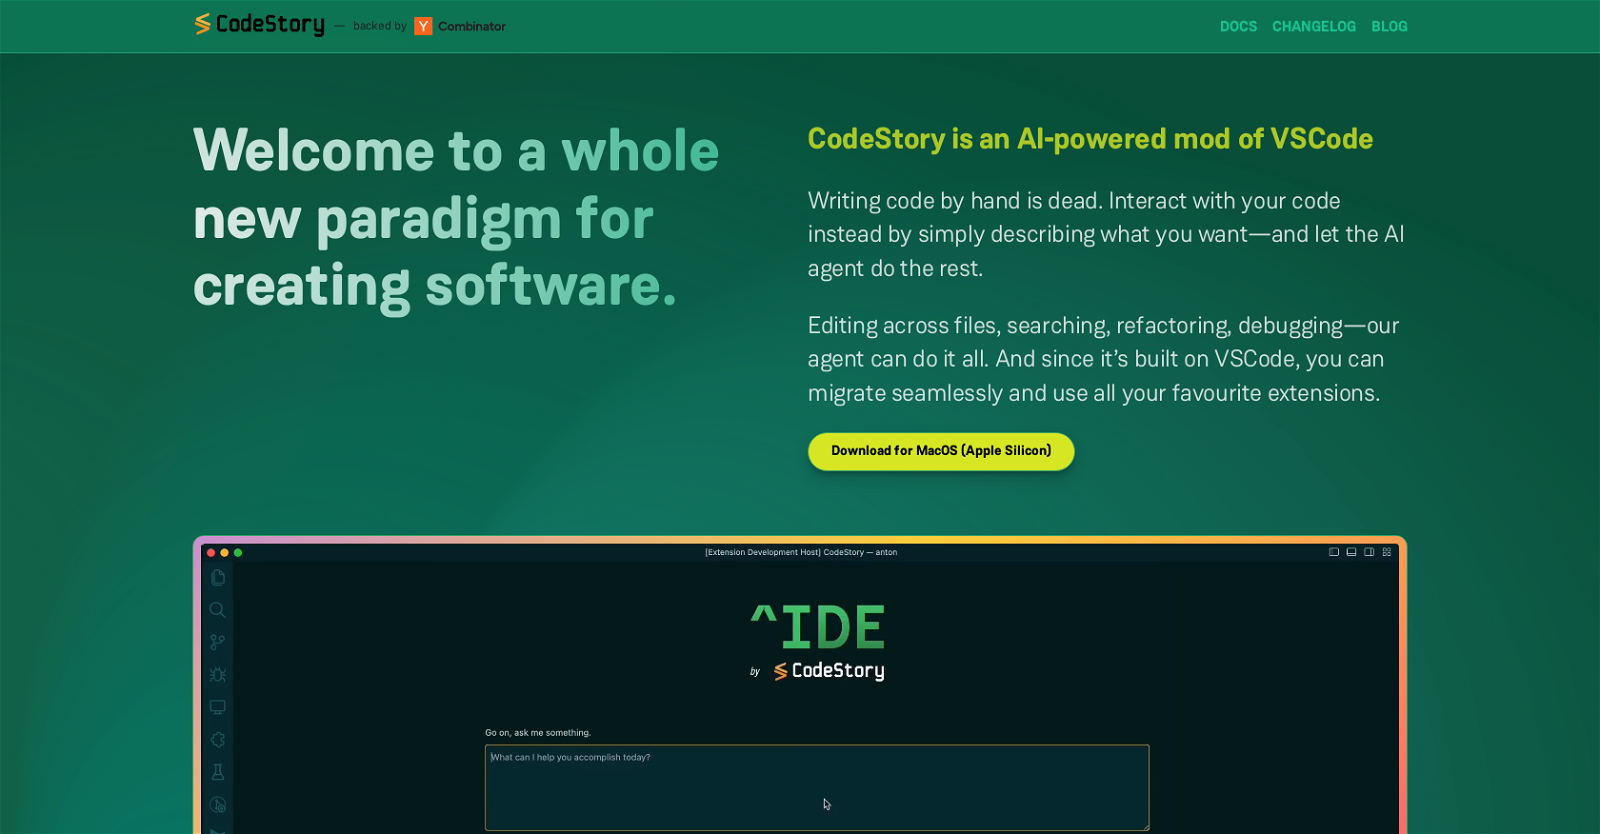 CodeStory website